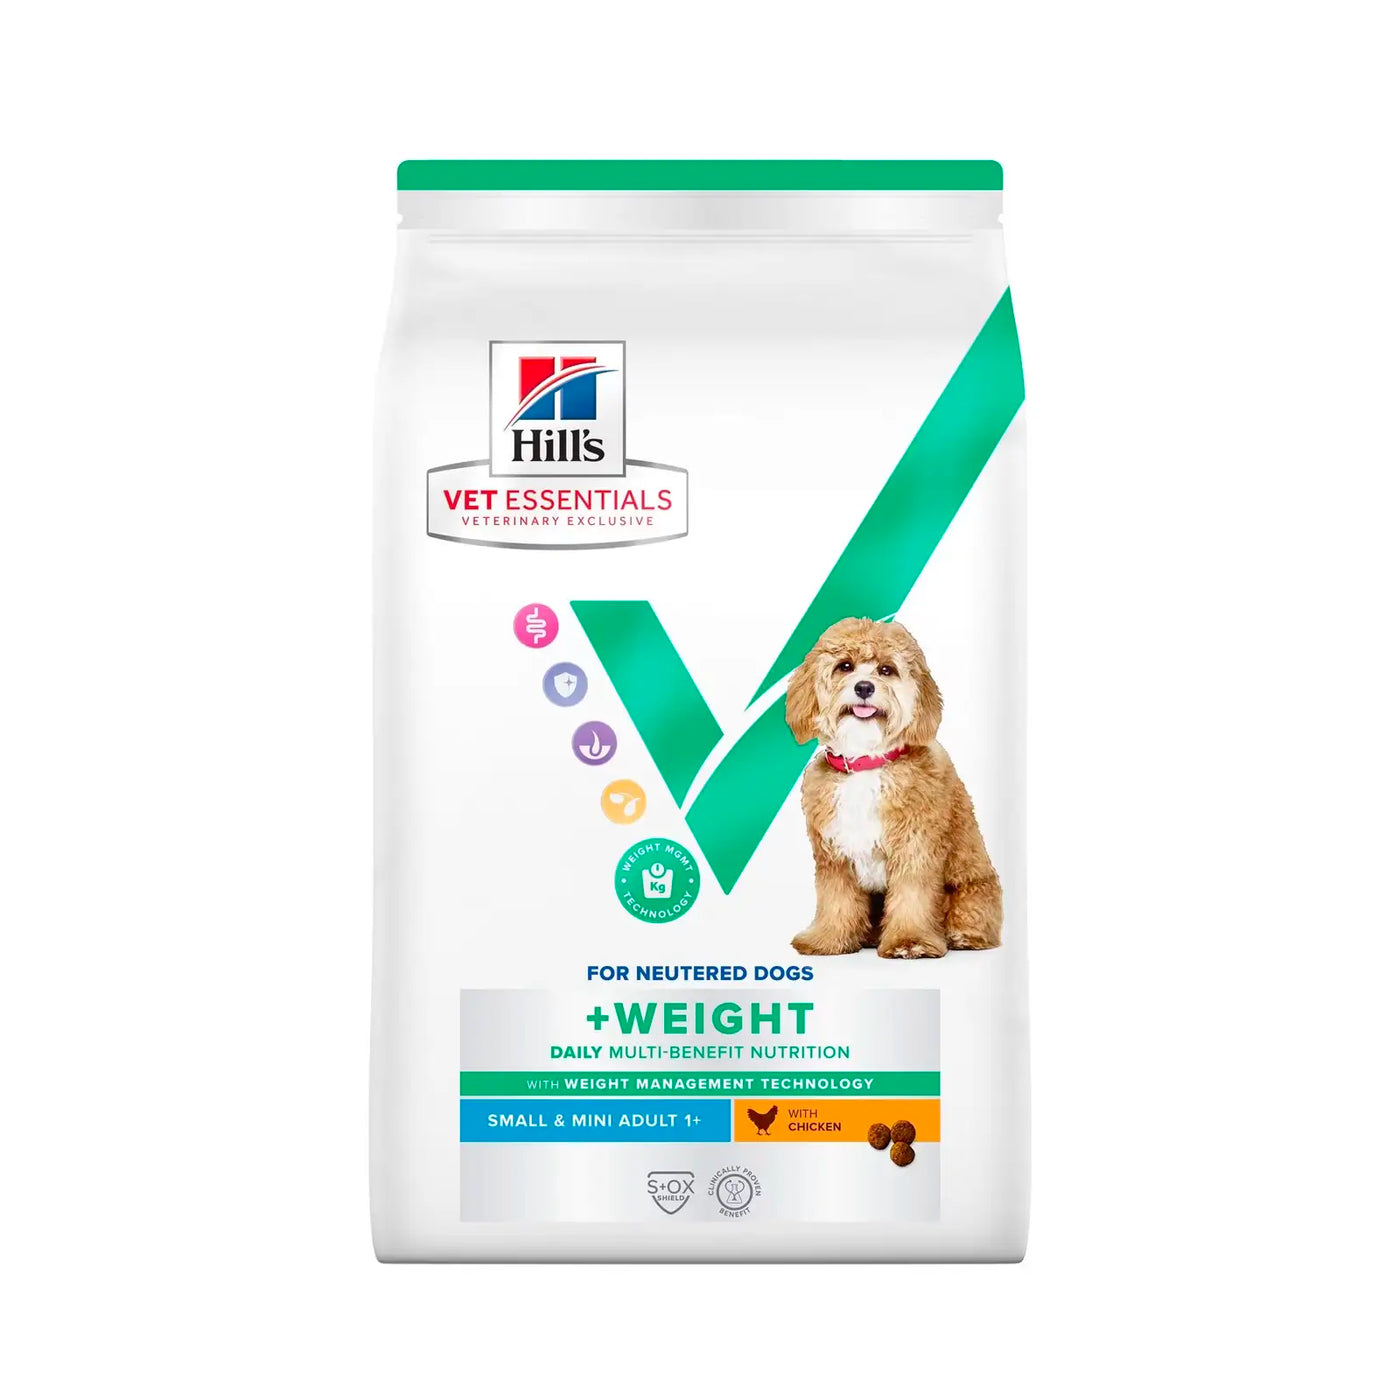 Hill's VetEssentials Neutered Adult Mini Dog Food - Vetopia